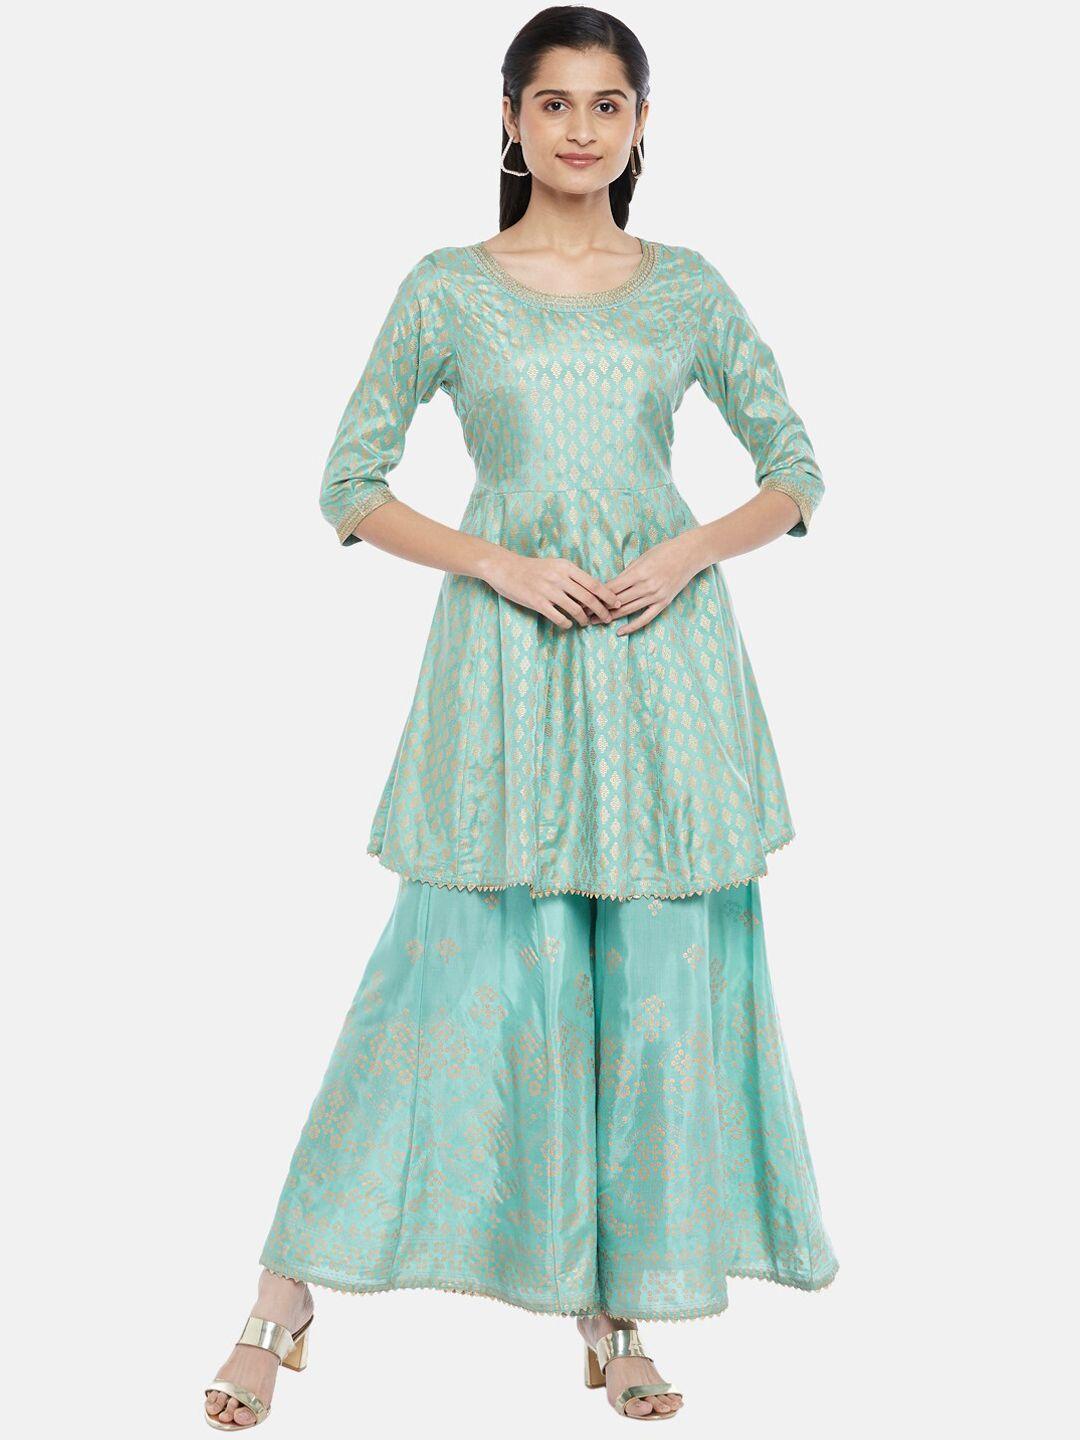 rangmanch by pantaloons women green ethnic motifs pure cotton kurti set with dupatta